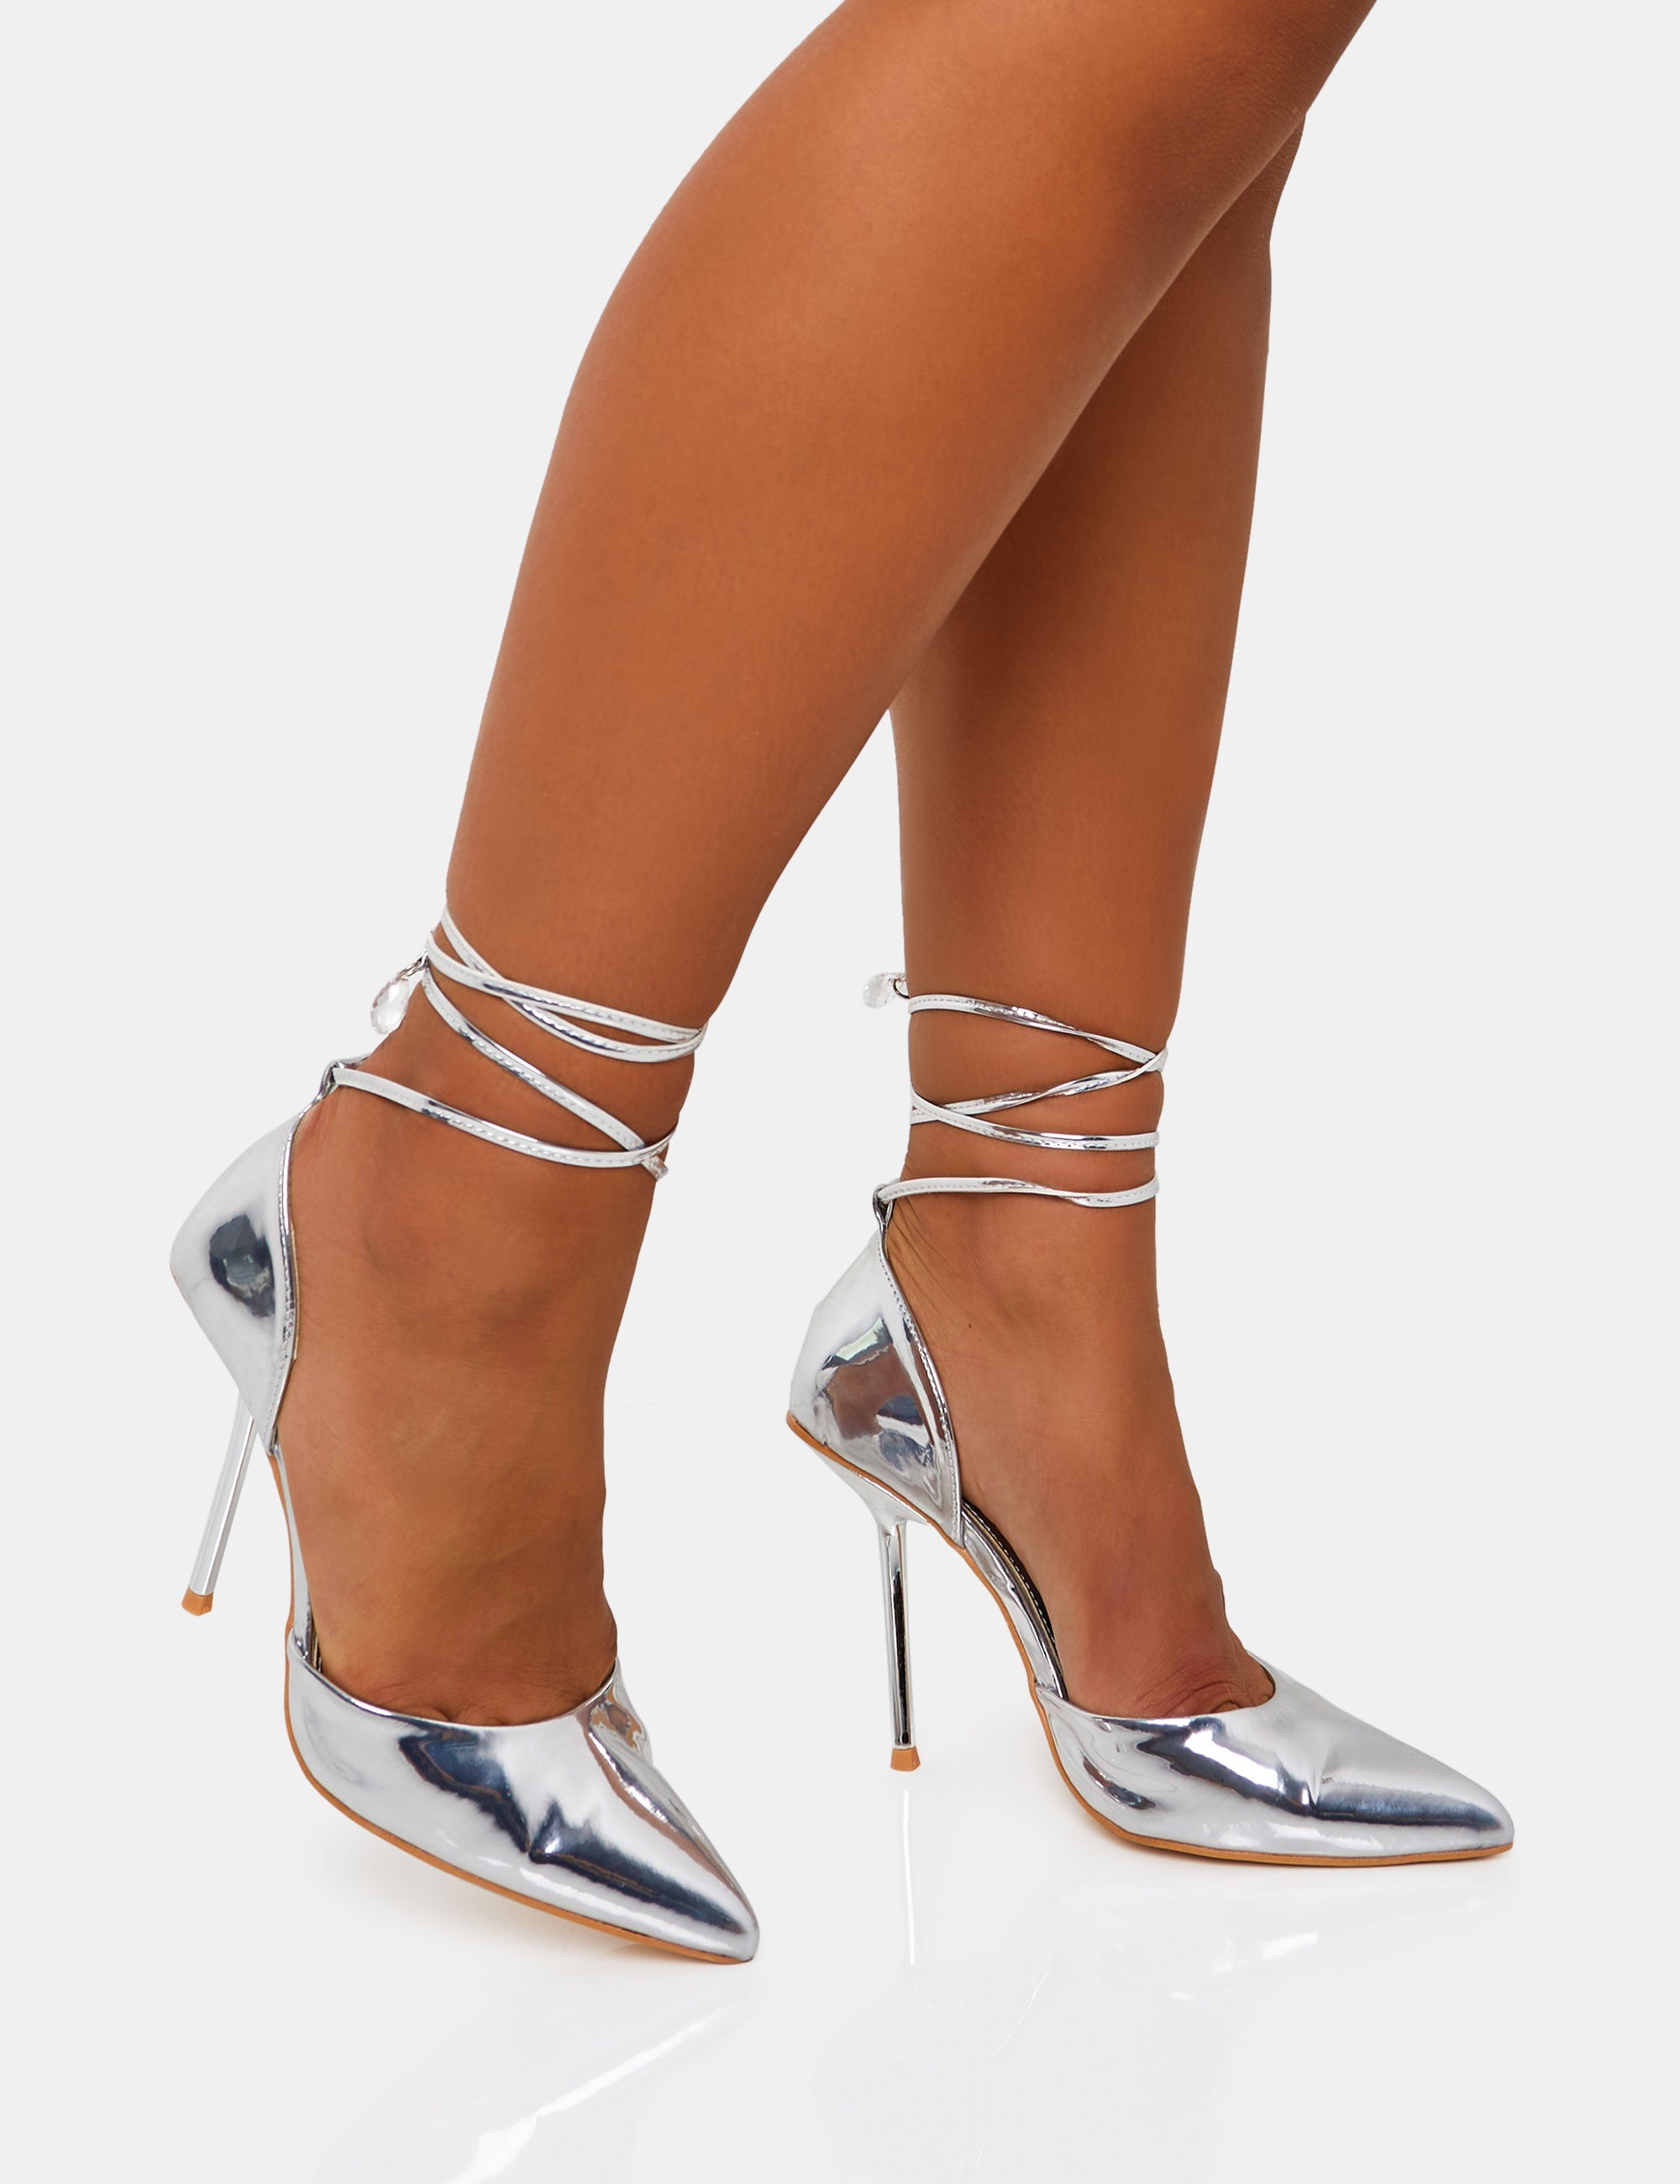 Buy Prettylittlething High Heel Sandals in Saudi, UAE, Kuwait and Qatar |  VogaCloset